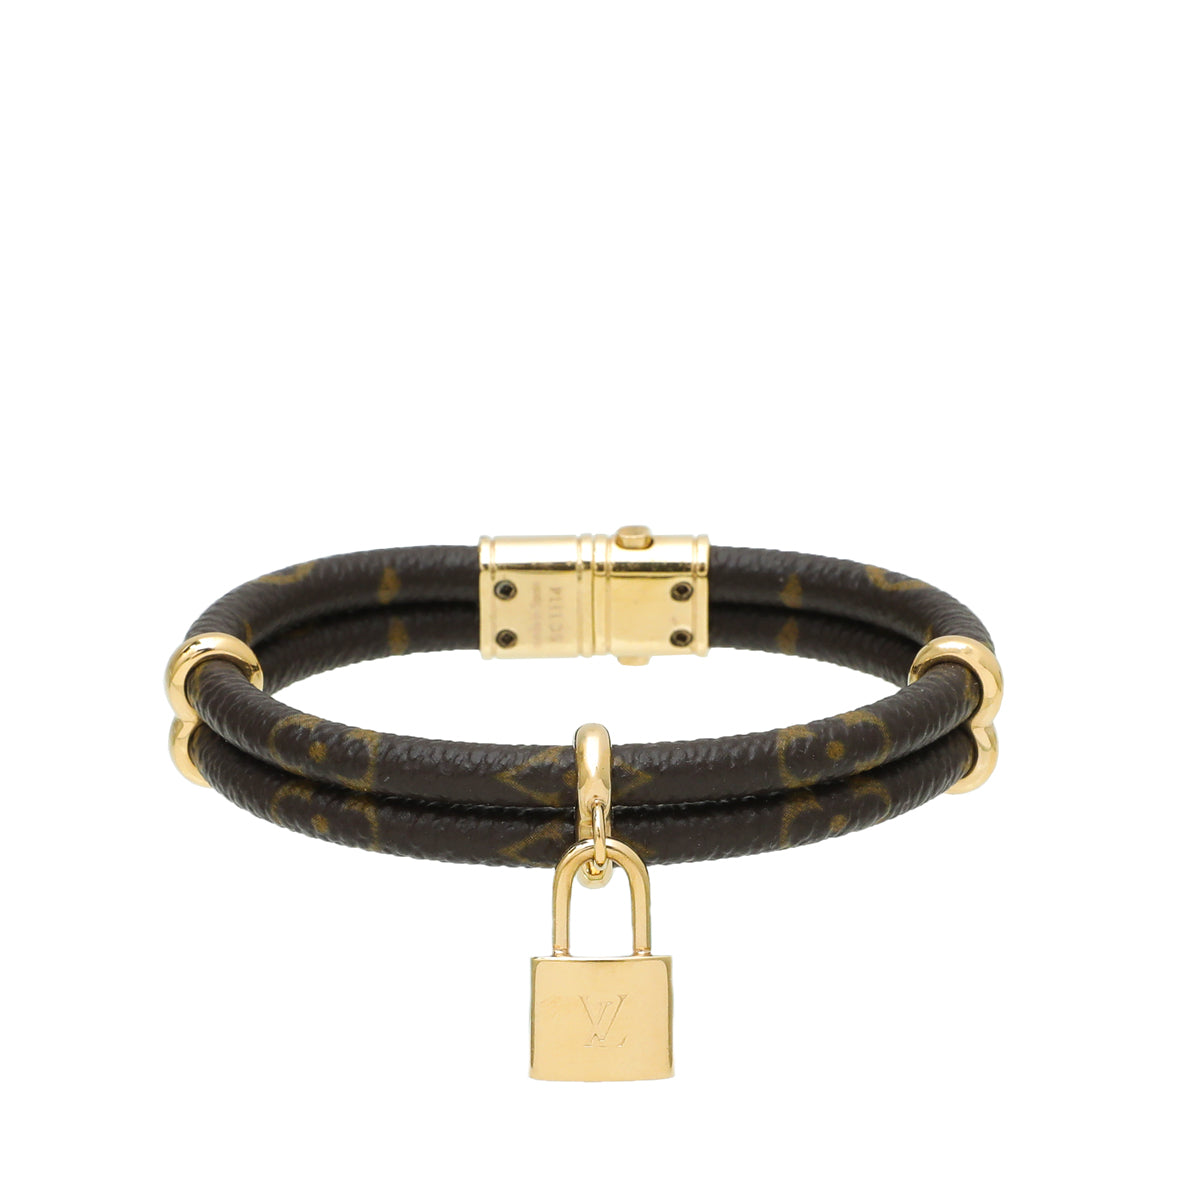 Louis Vuitton Keep IT Twice Damier Bracelet